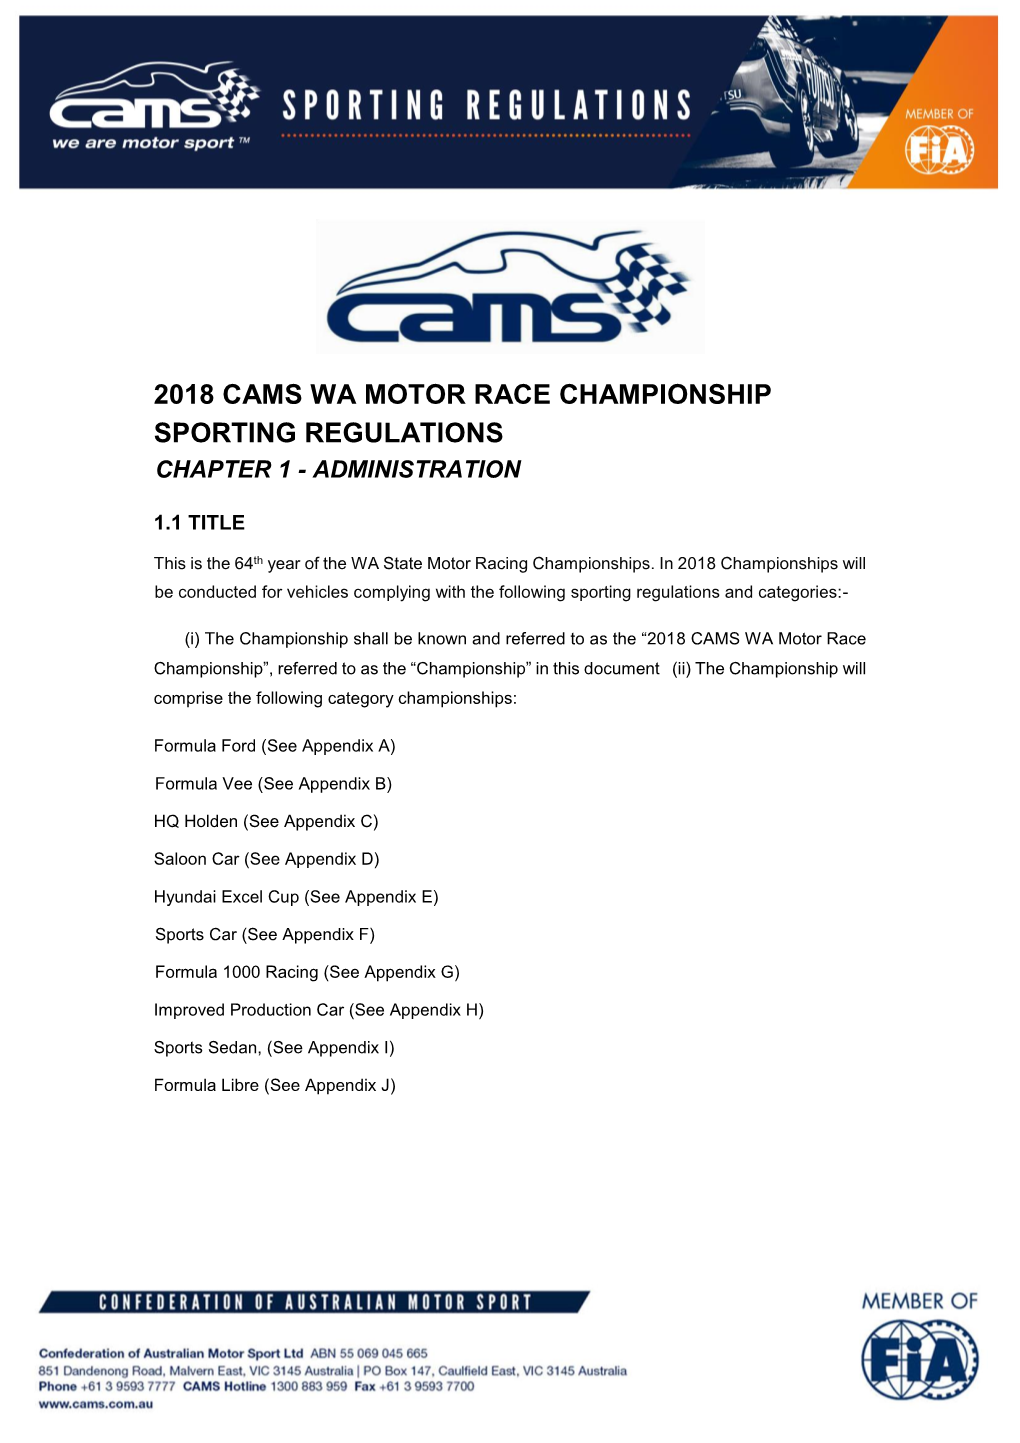 2018 CAMS WA MOTOR RACE CHAMPIONSHIP SPORTING REGULATIONS Fall